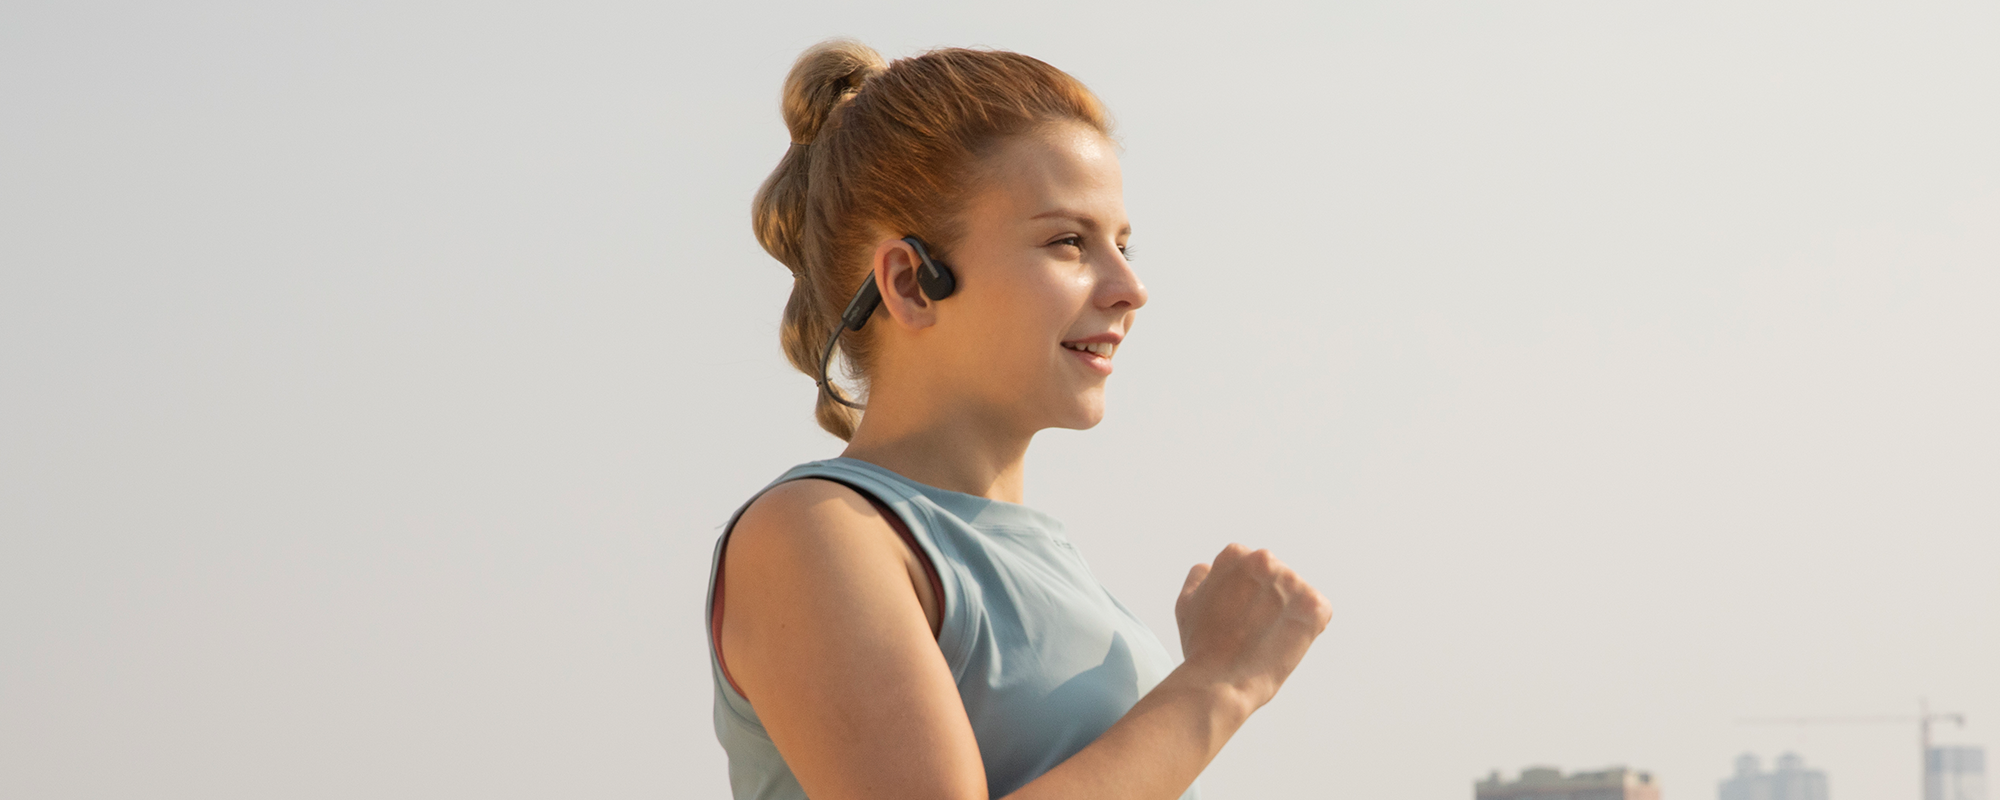 Woman running outdoors wearing Shokz open-ear wireless headphones